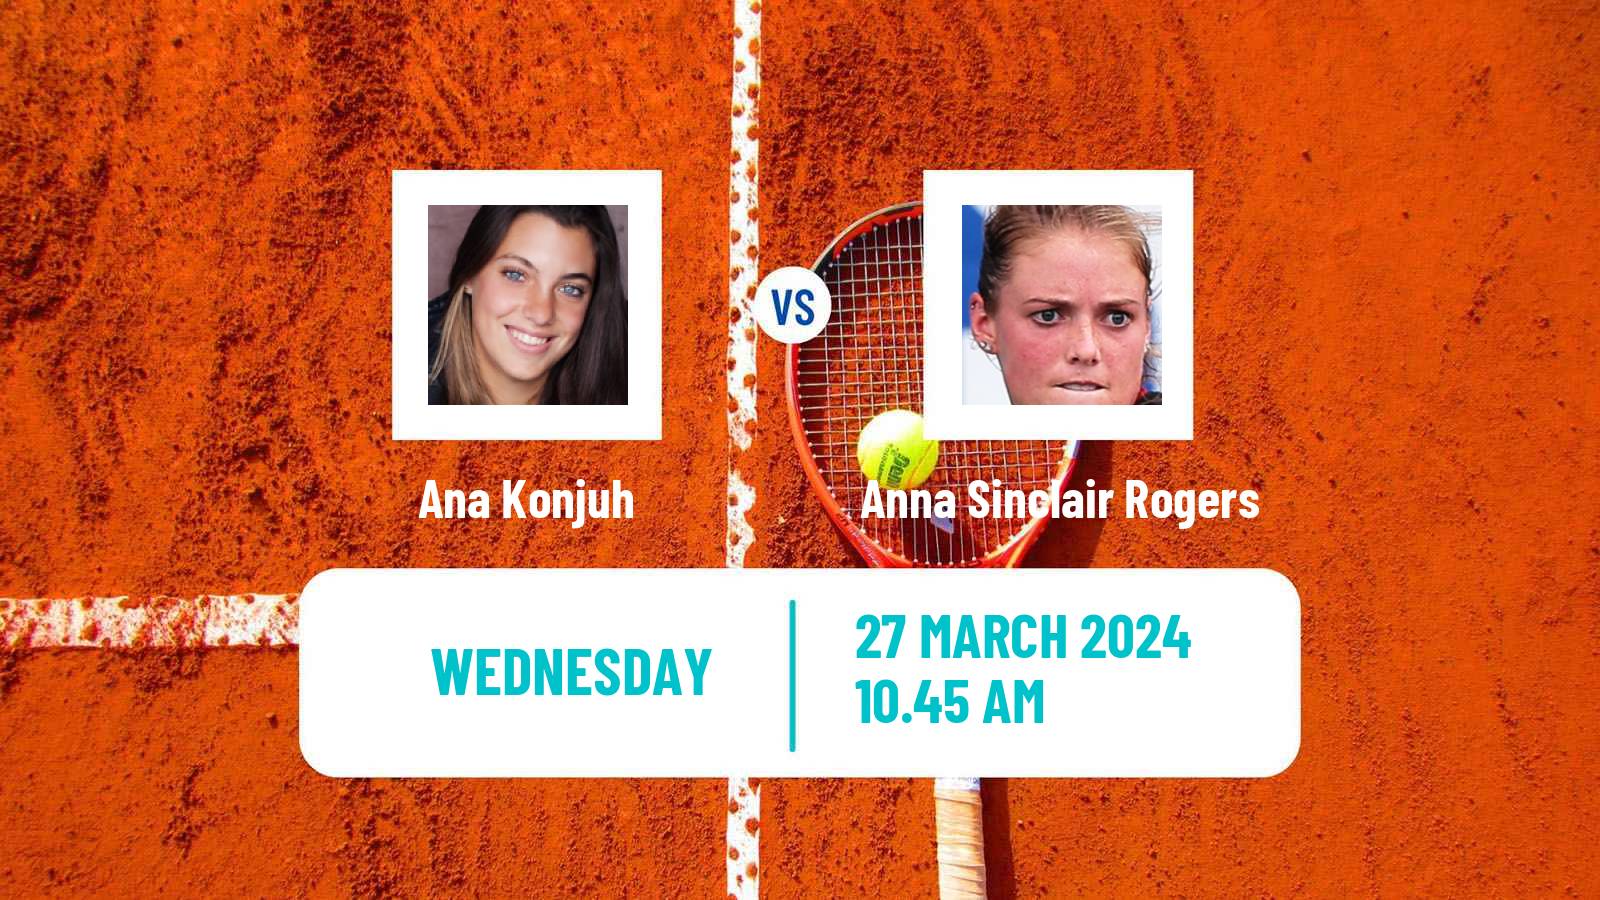 Tennis ITF W50 Murska Sobota Women Ana Konjuh - Anna Sinclair Rogers